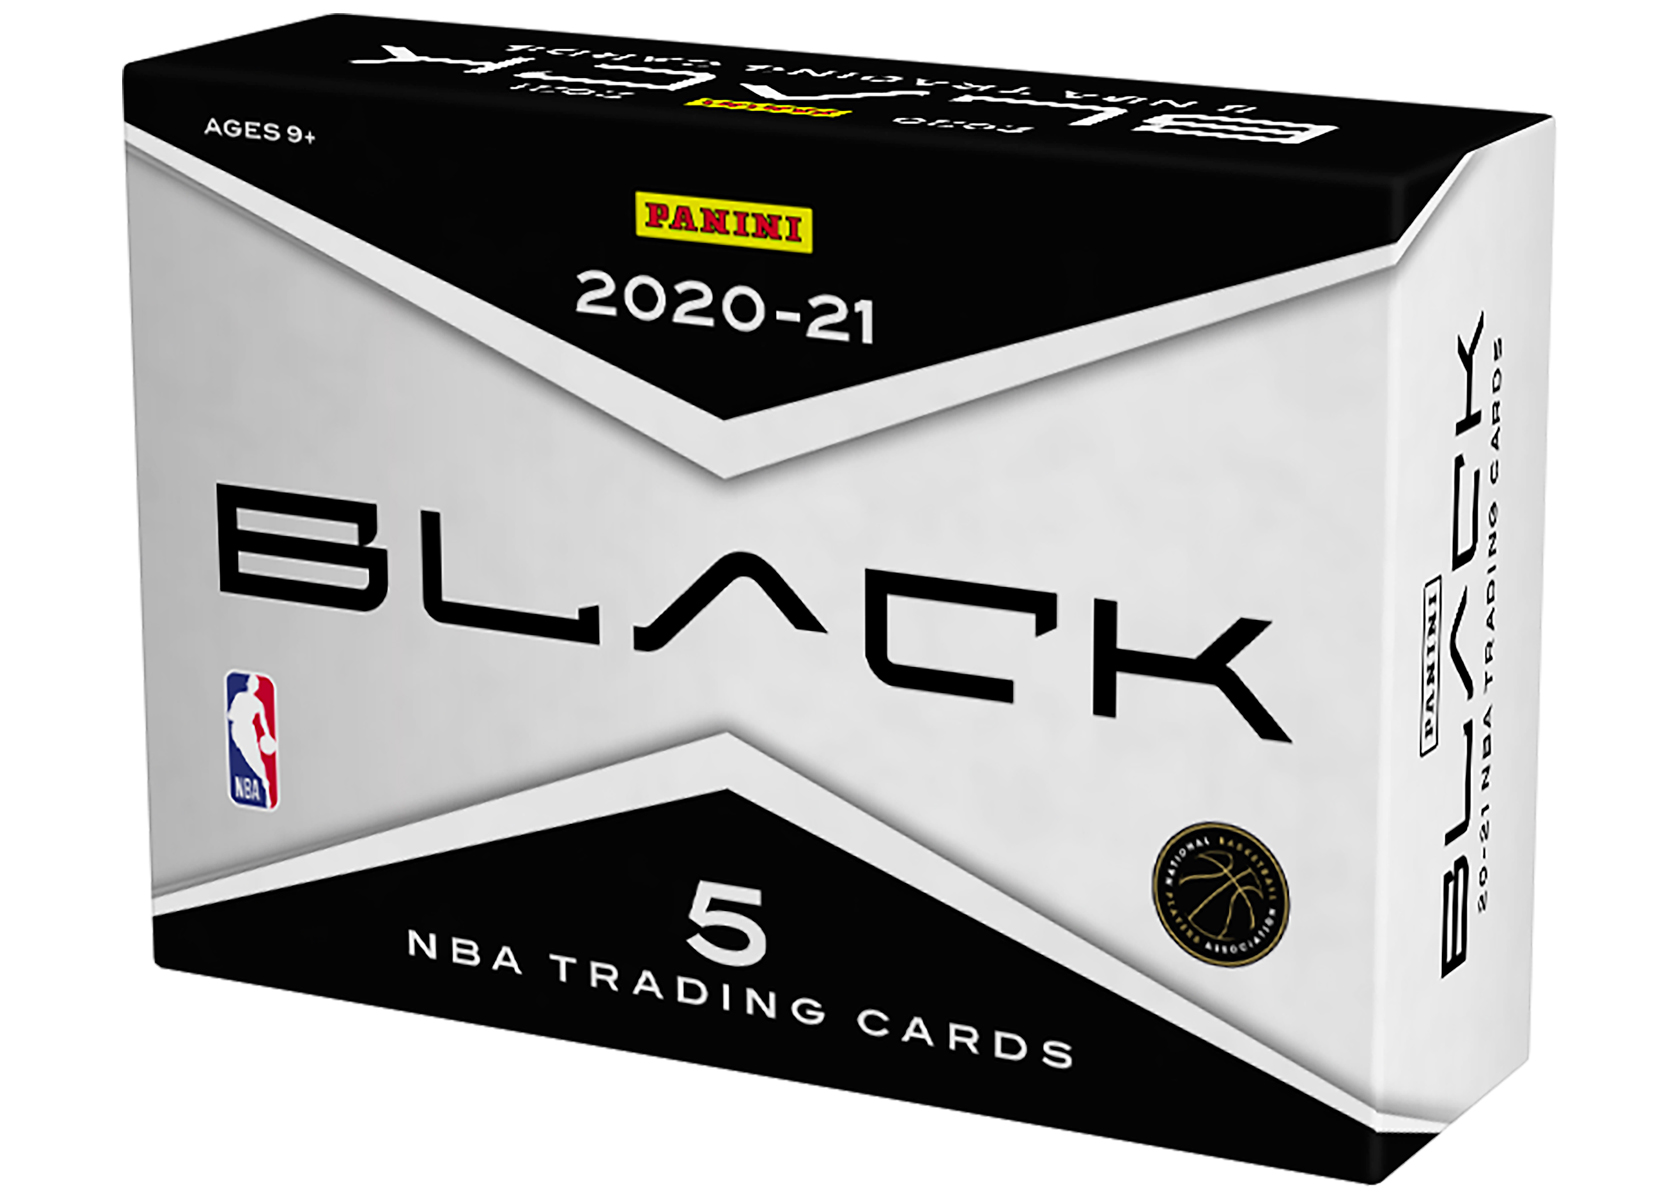 2020-21 Panini Black Basketball Hobby Box